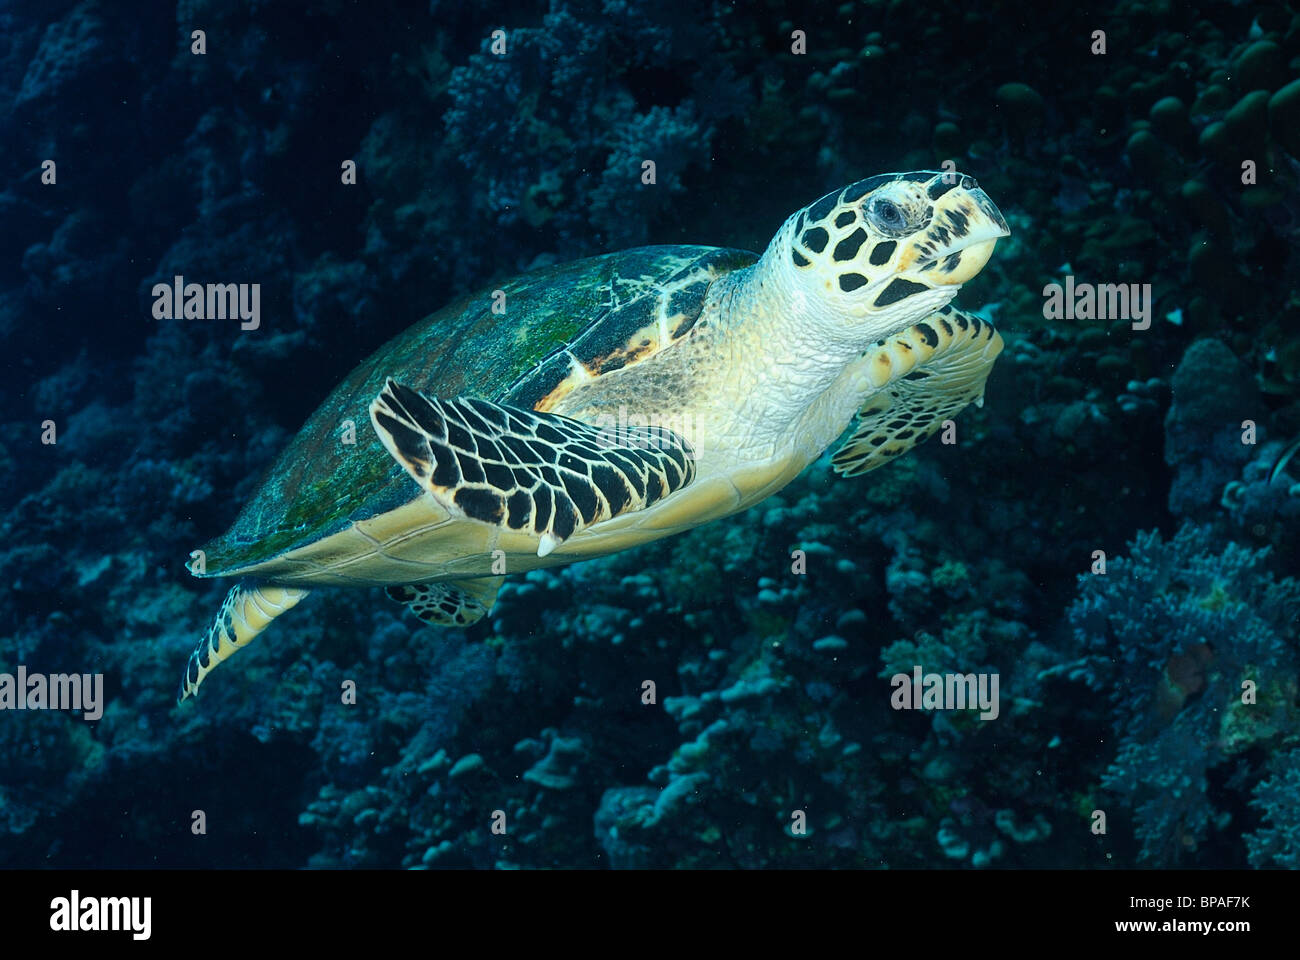 Loggerhead turtle off Brothers Islands, Red Sea, off Egypt coast Stock Photo